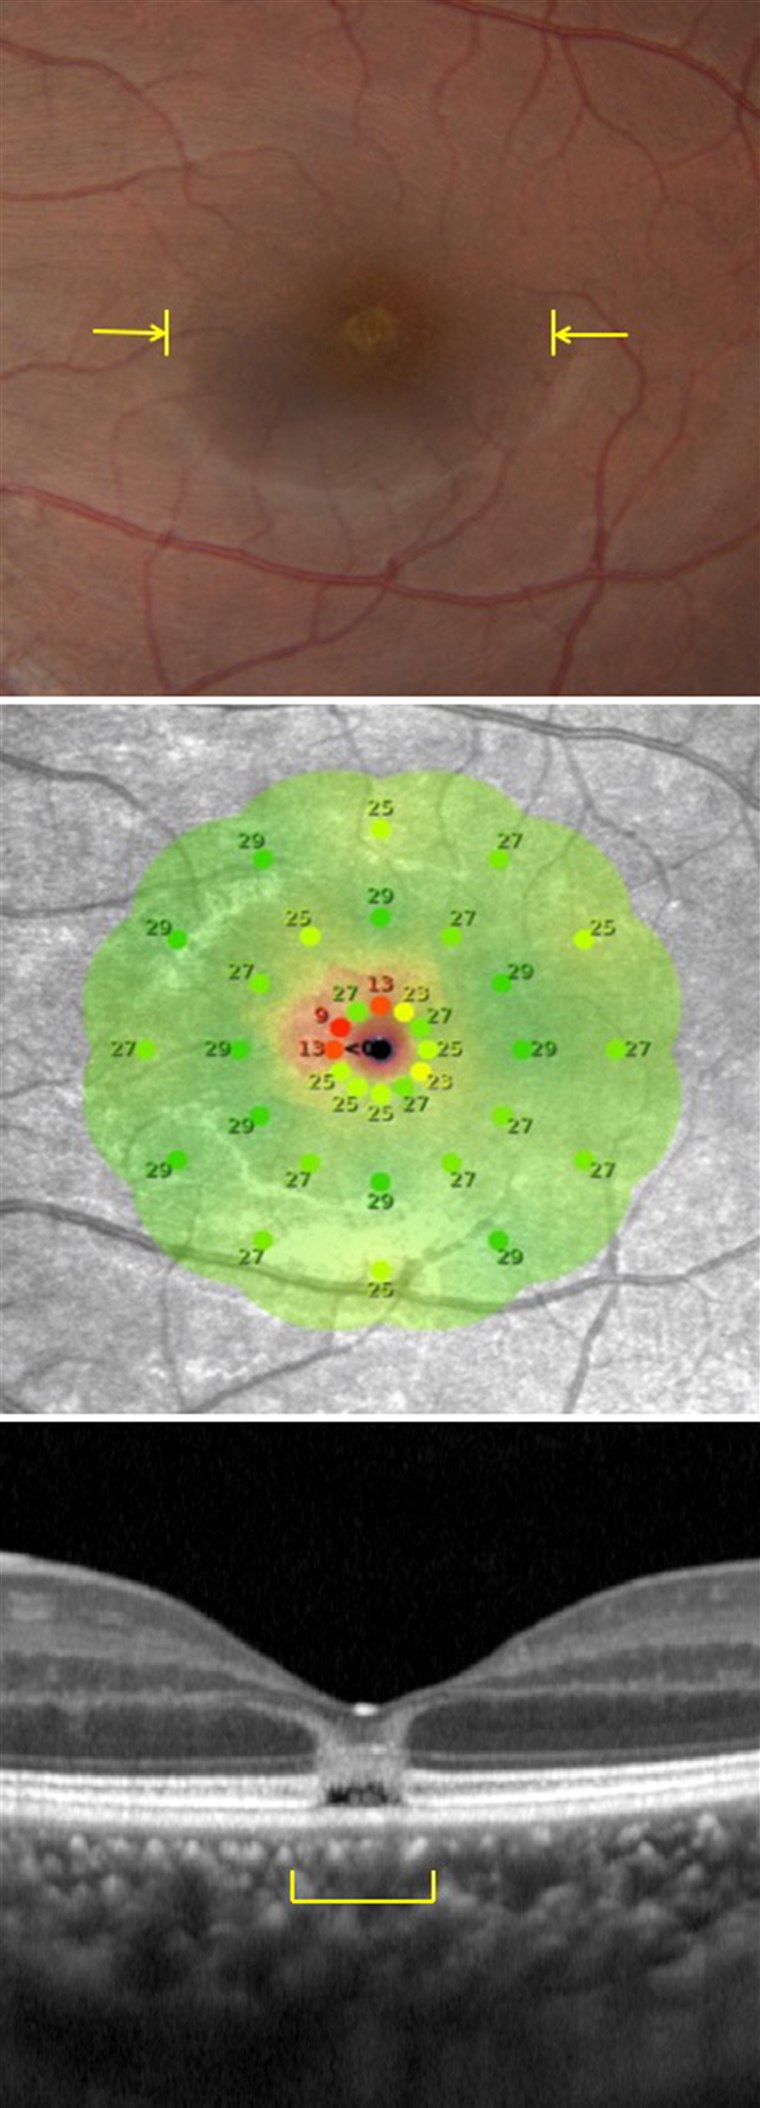 الجديد technology allowed doctors to see for the first time what happens when someone experiences solar retinopathy. 